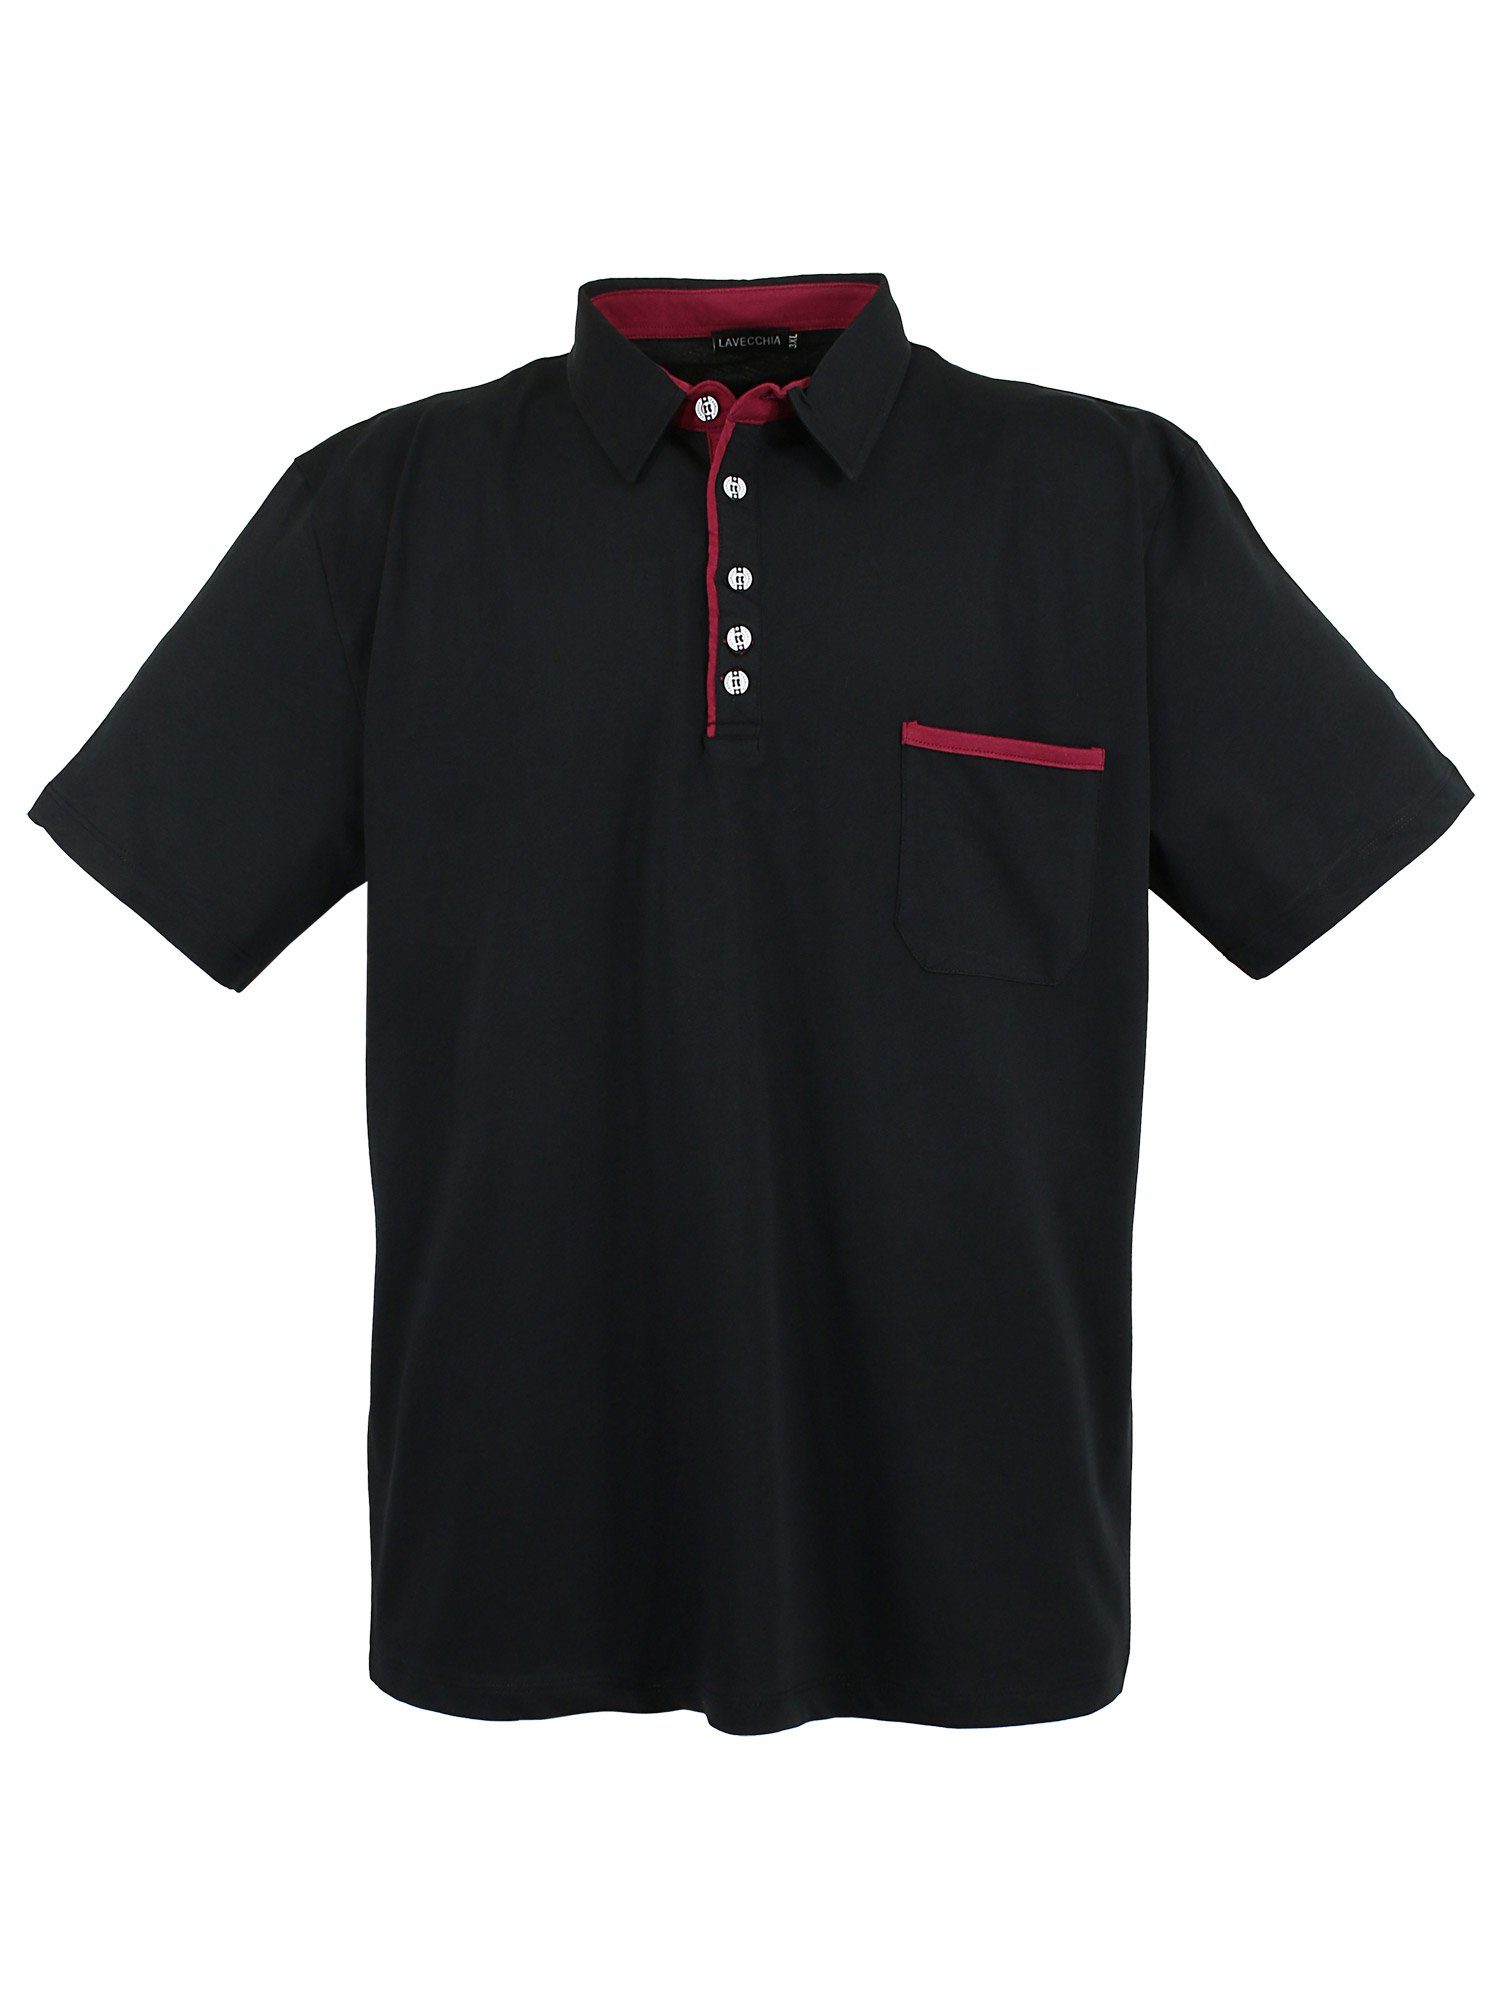 Lavecchia Poloshirt Übergrößen Herren Polo Shirt LV-1701 Herren Polo Shirt schwarz